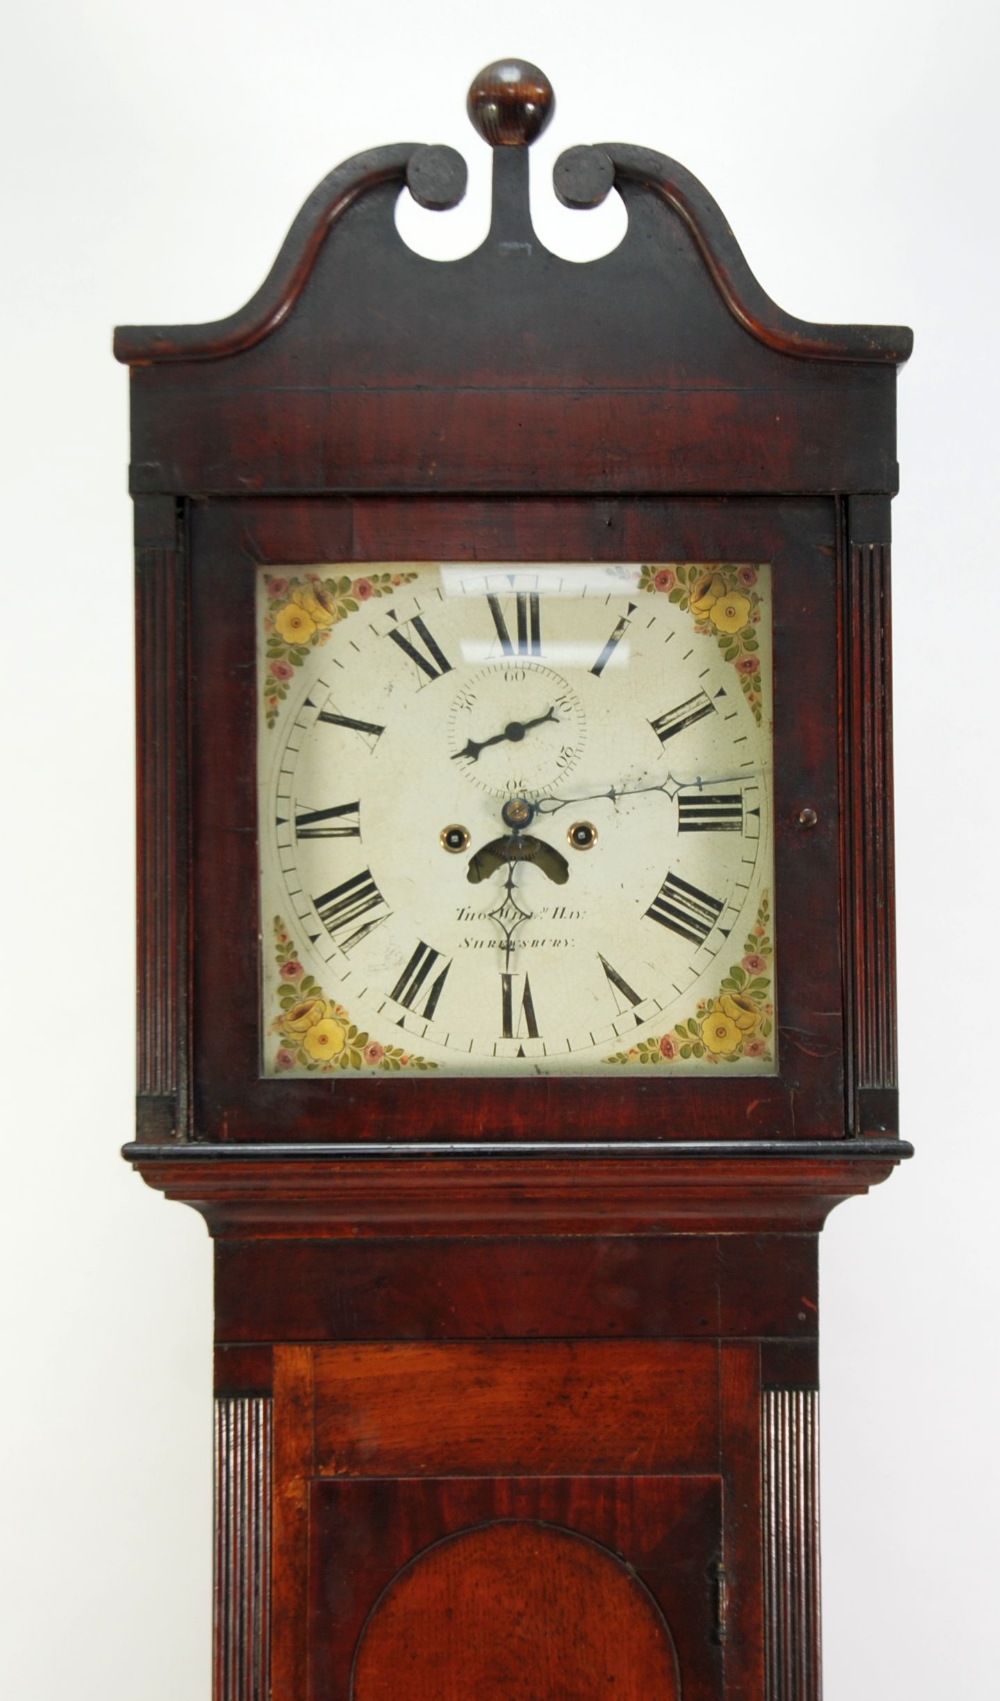 EARLY NINETEENTH CENTURY OAK AND MAHOGANY LONGCASE CLOCK, signed Thomas William Hay, Shrewsbury,